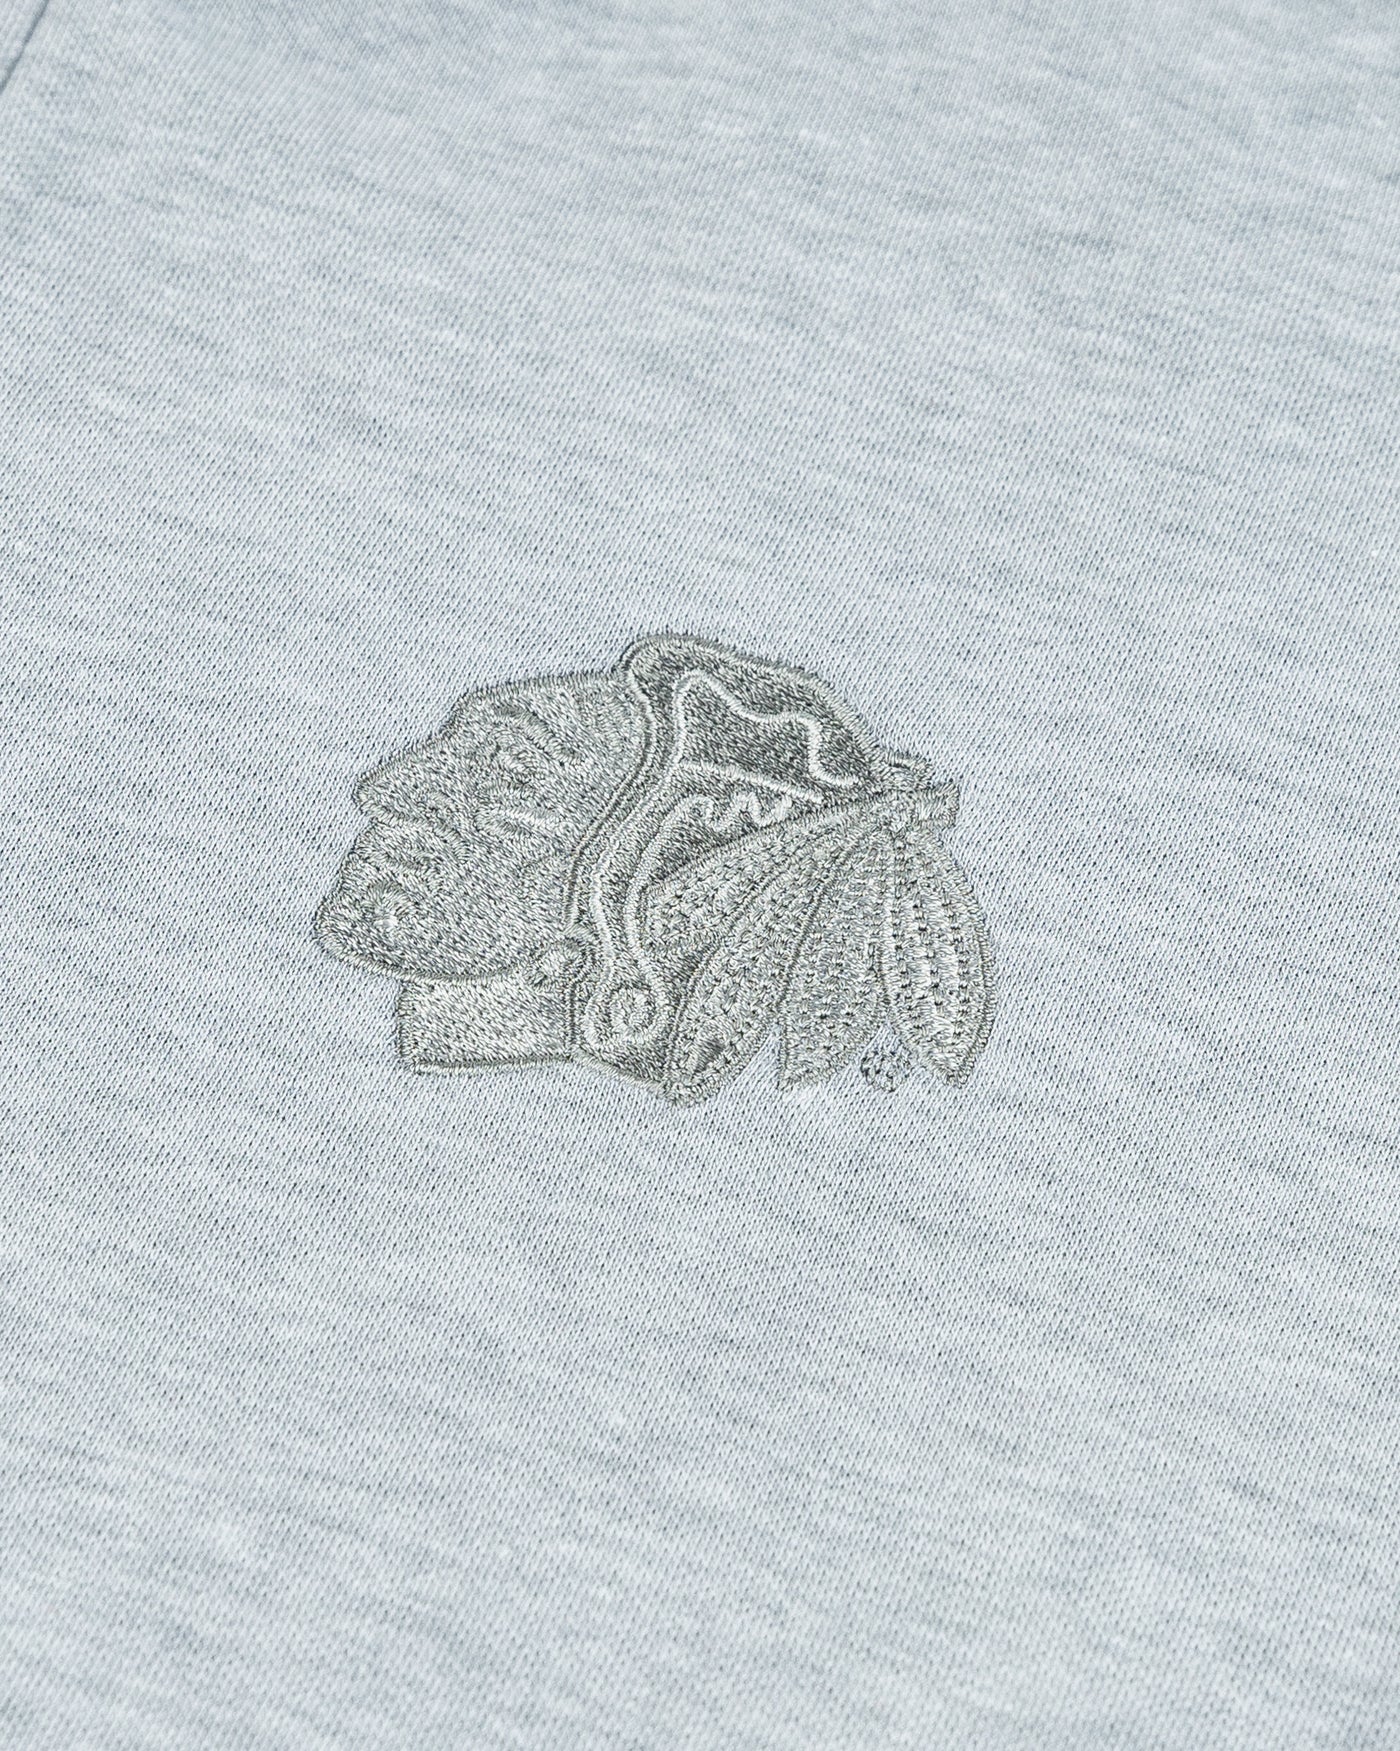 heather grey TravisMathew quarter zip with Chicago Blackhawks primary logo on left chest - detail  lay flat